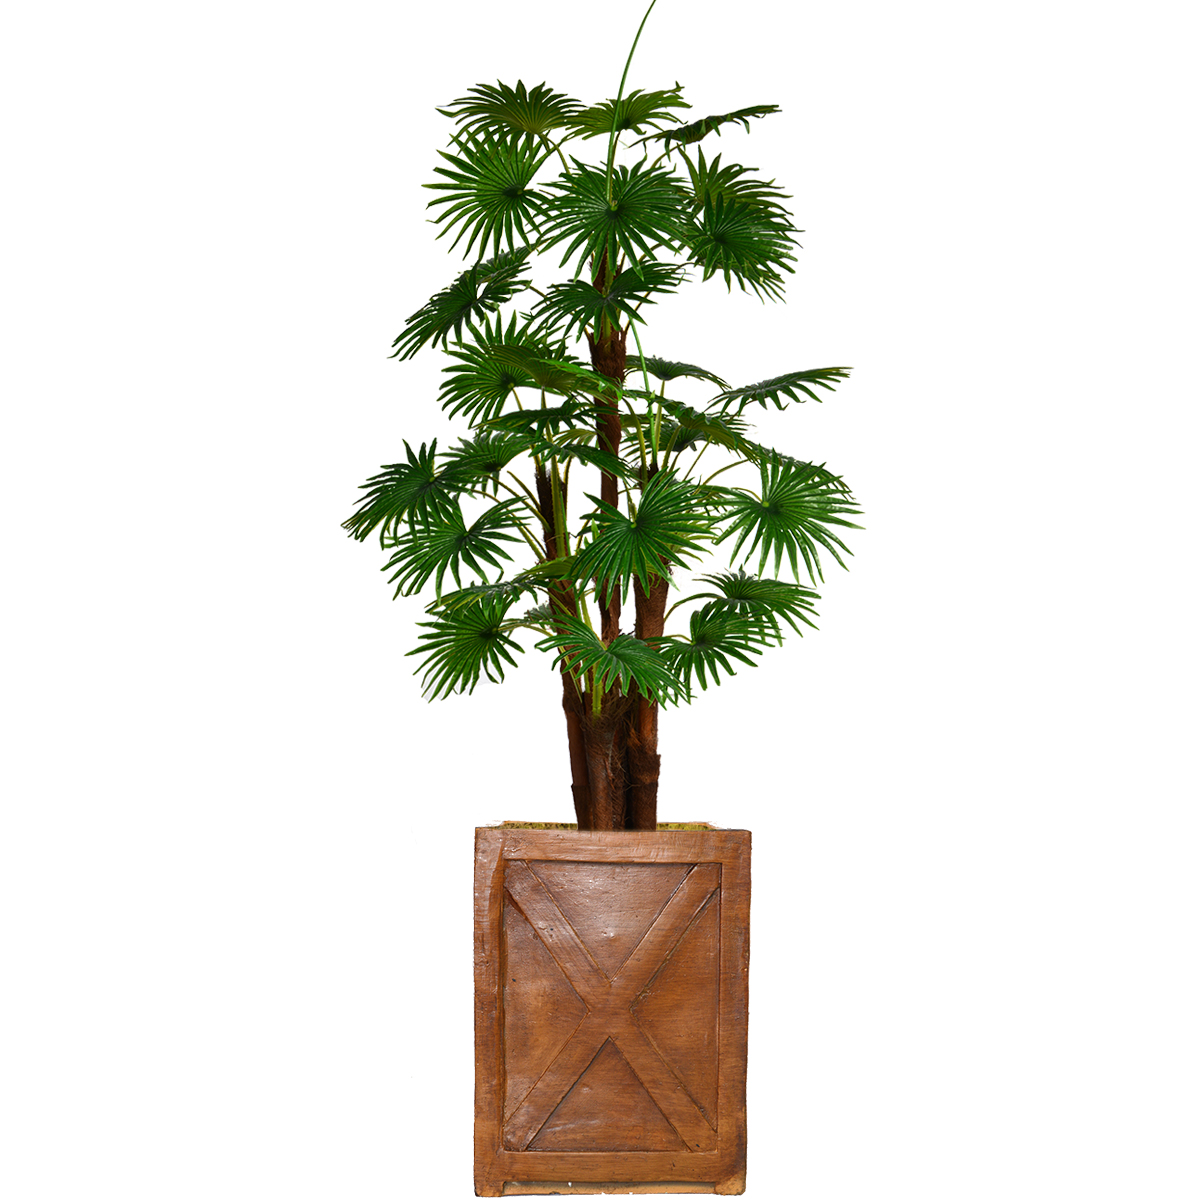 Vhx129207 75 In. Tall Fan Palm Tree, Burlap Kit & Fiberstone Planter